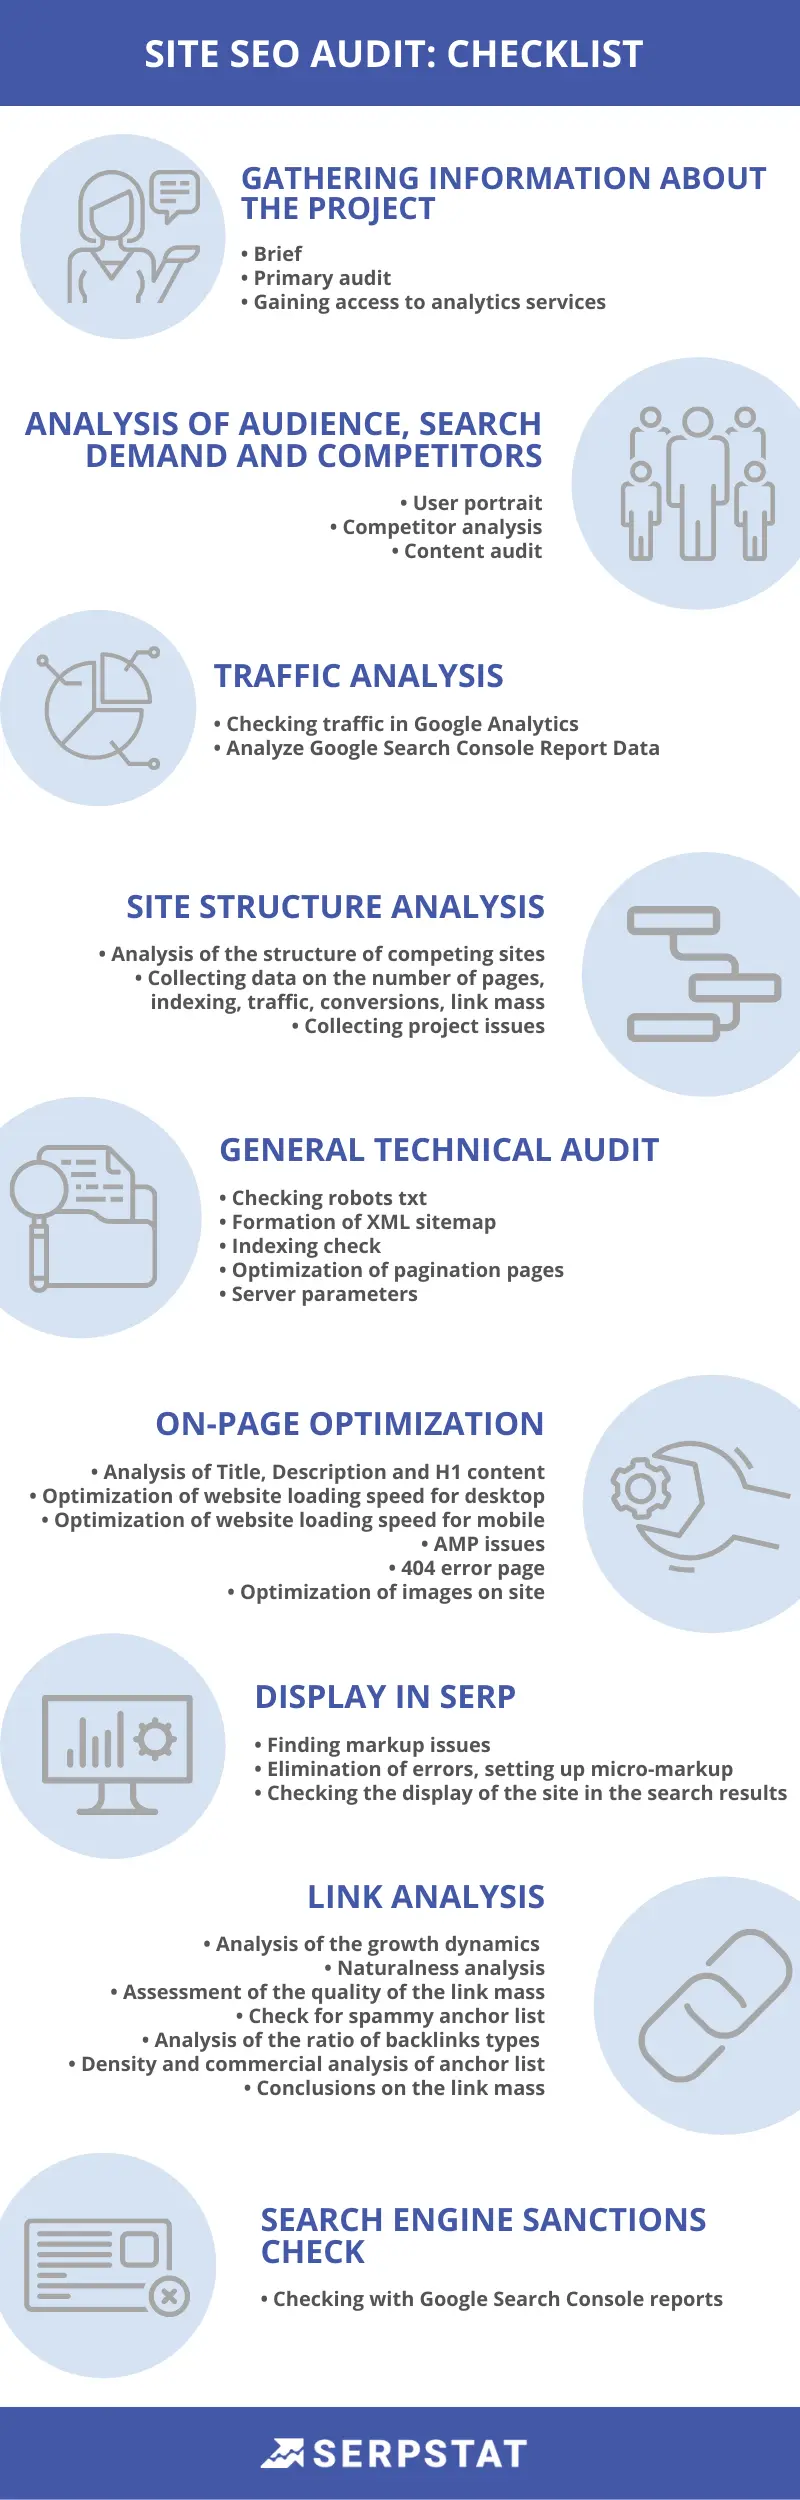 Site SEO audit: checklist